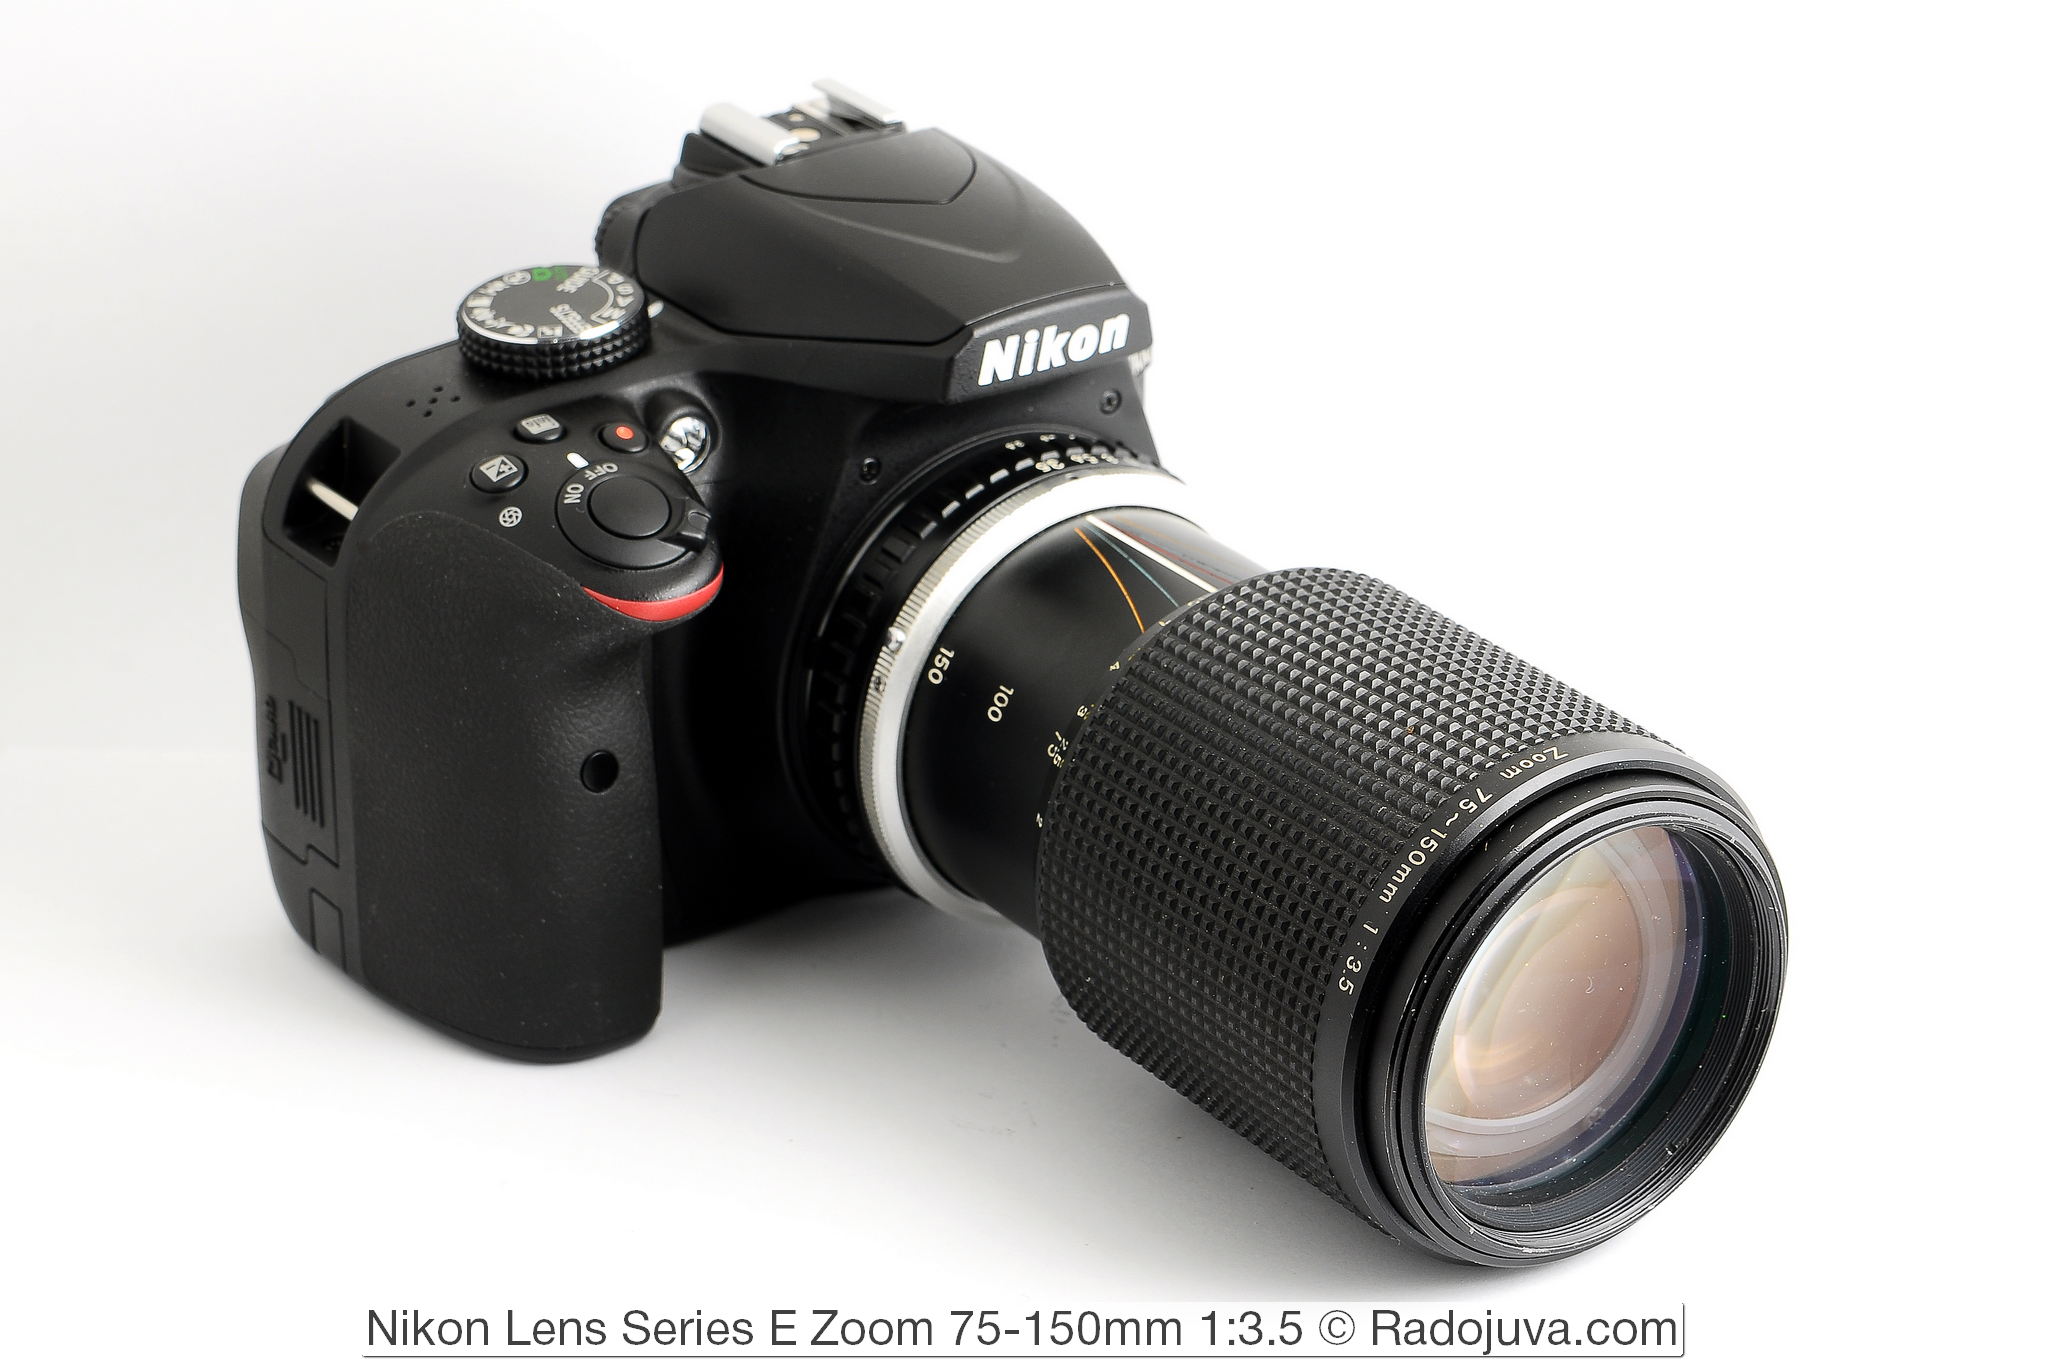 Nikon Lens Series E Zoom 75-150mm 1:3.5 (MKII)